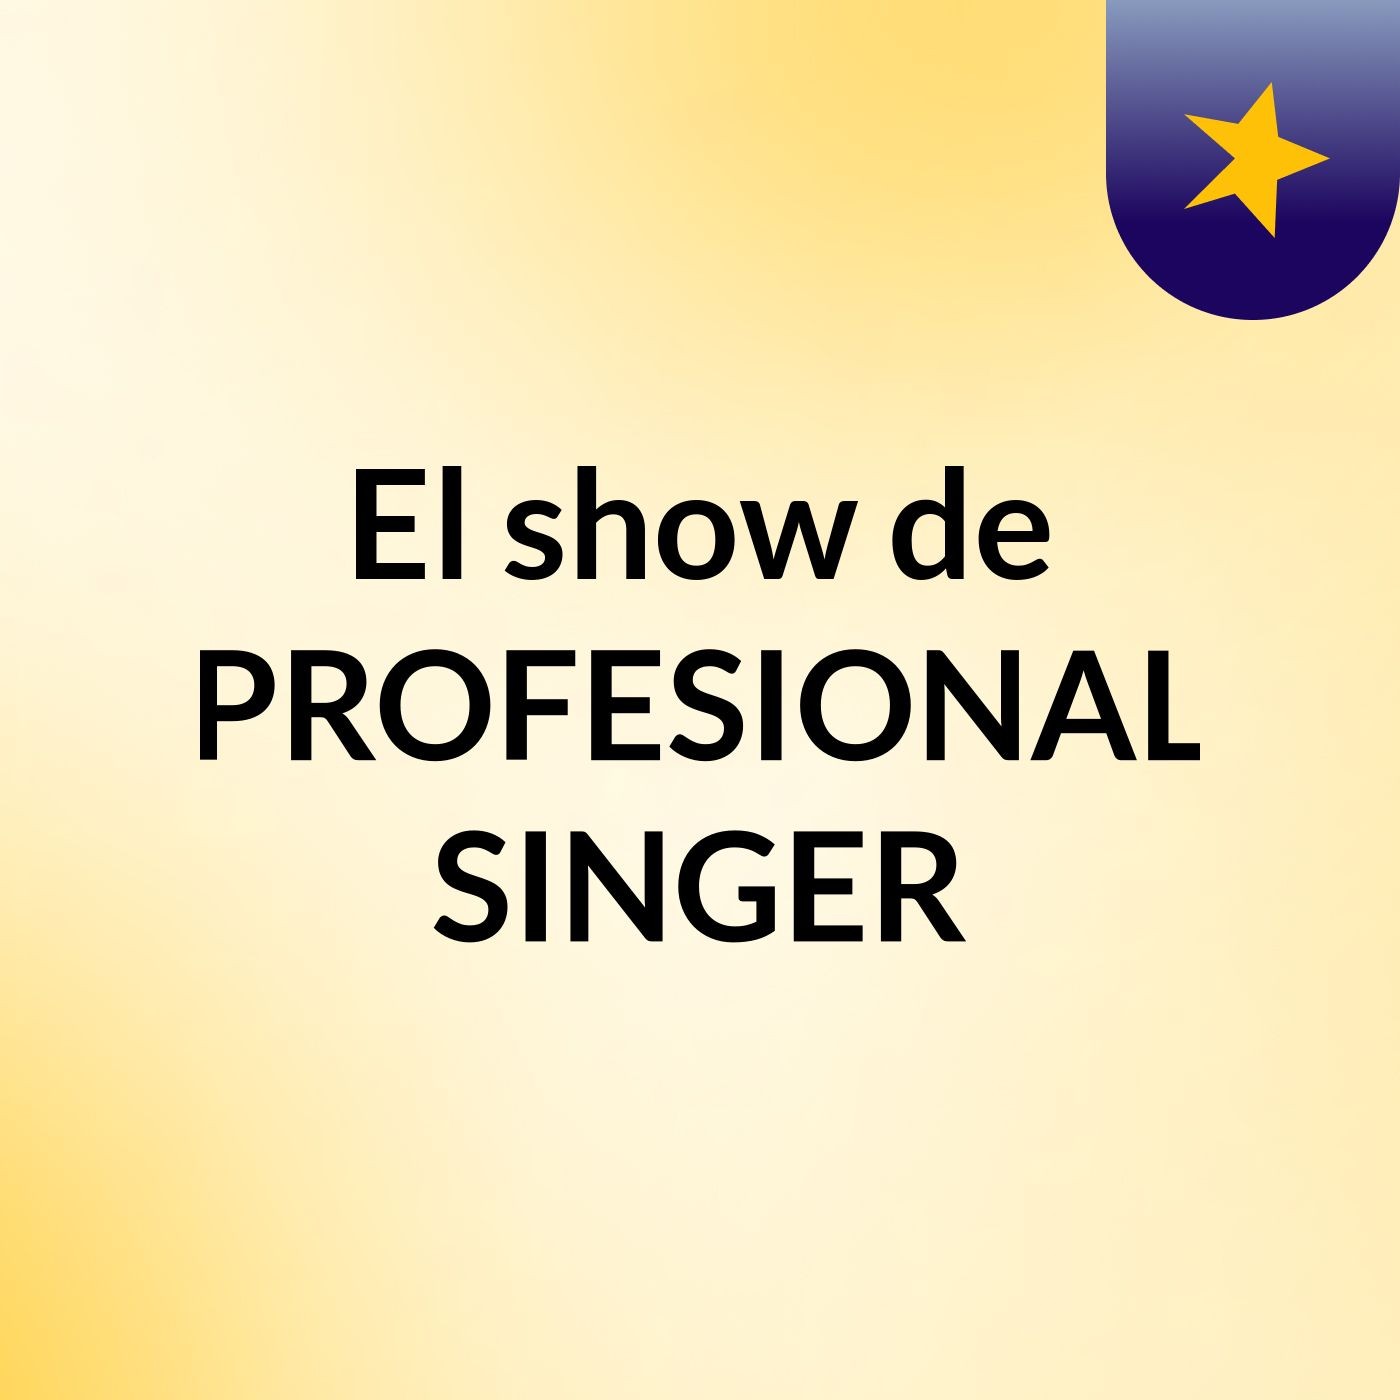 El show de PROFESIONAL SINGER